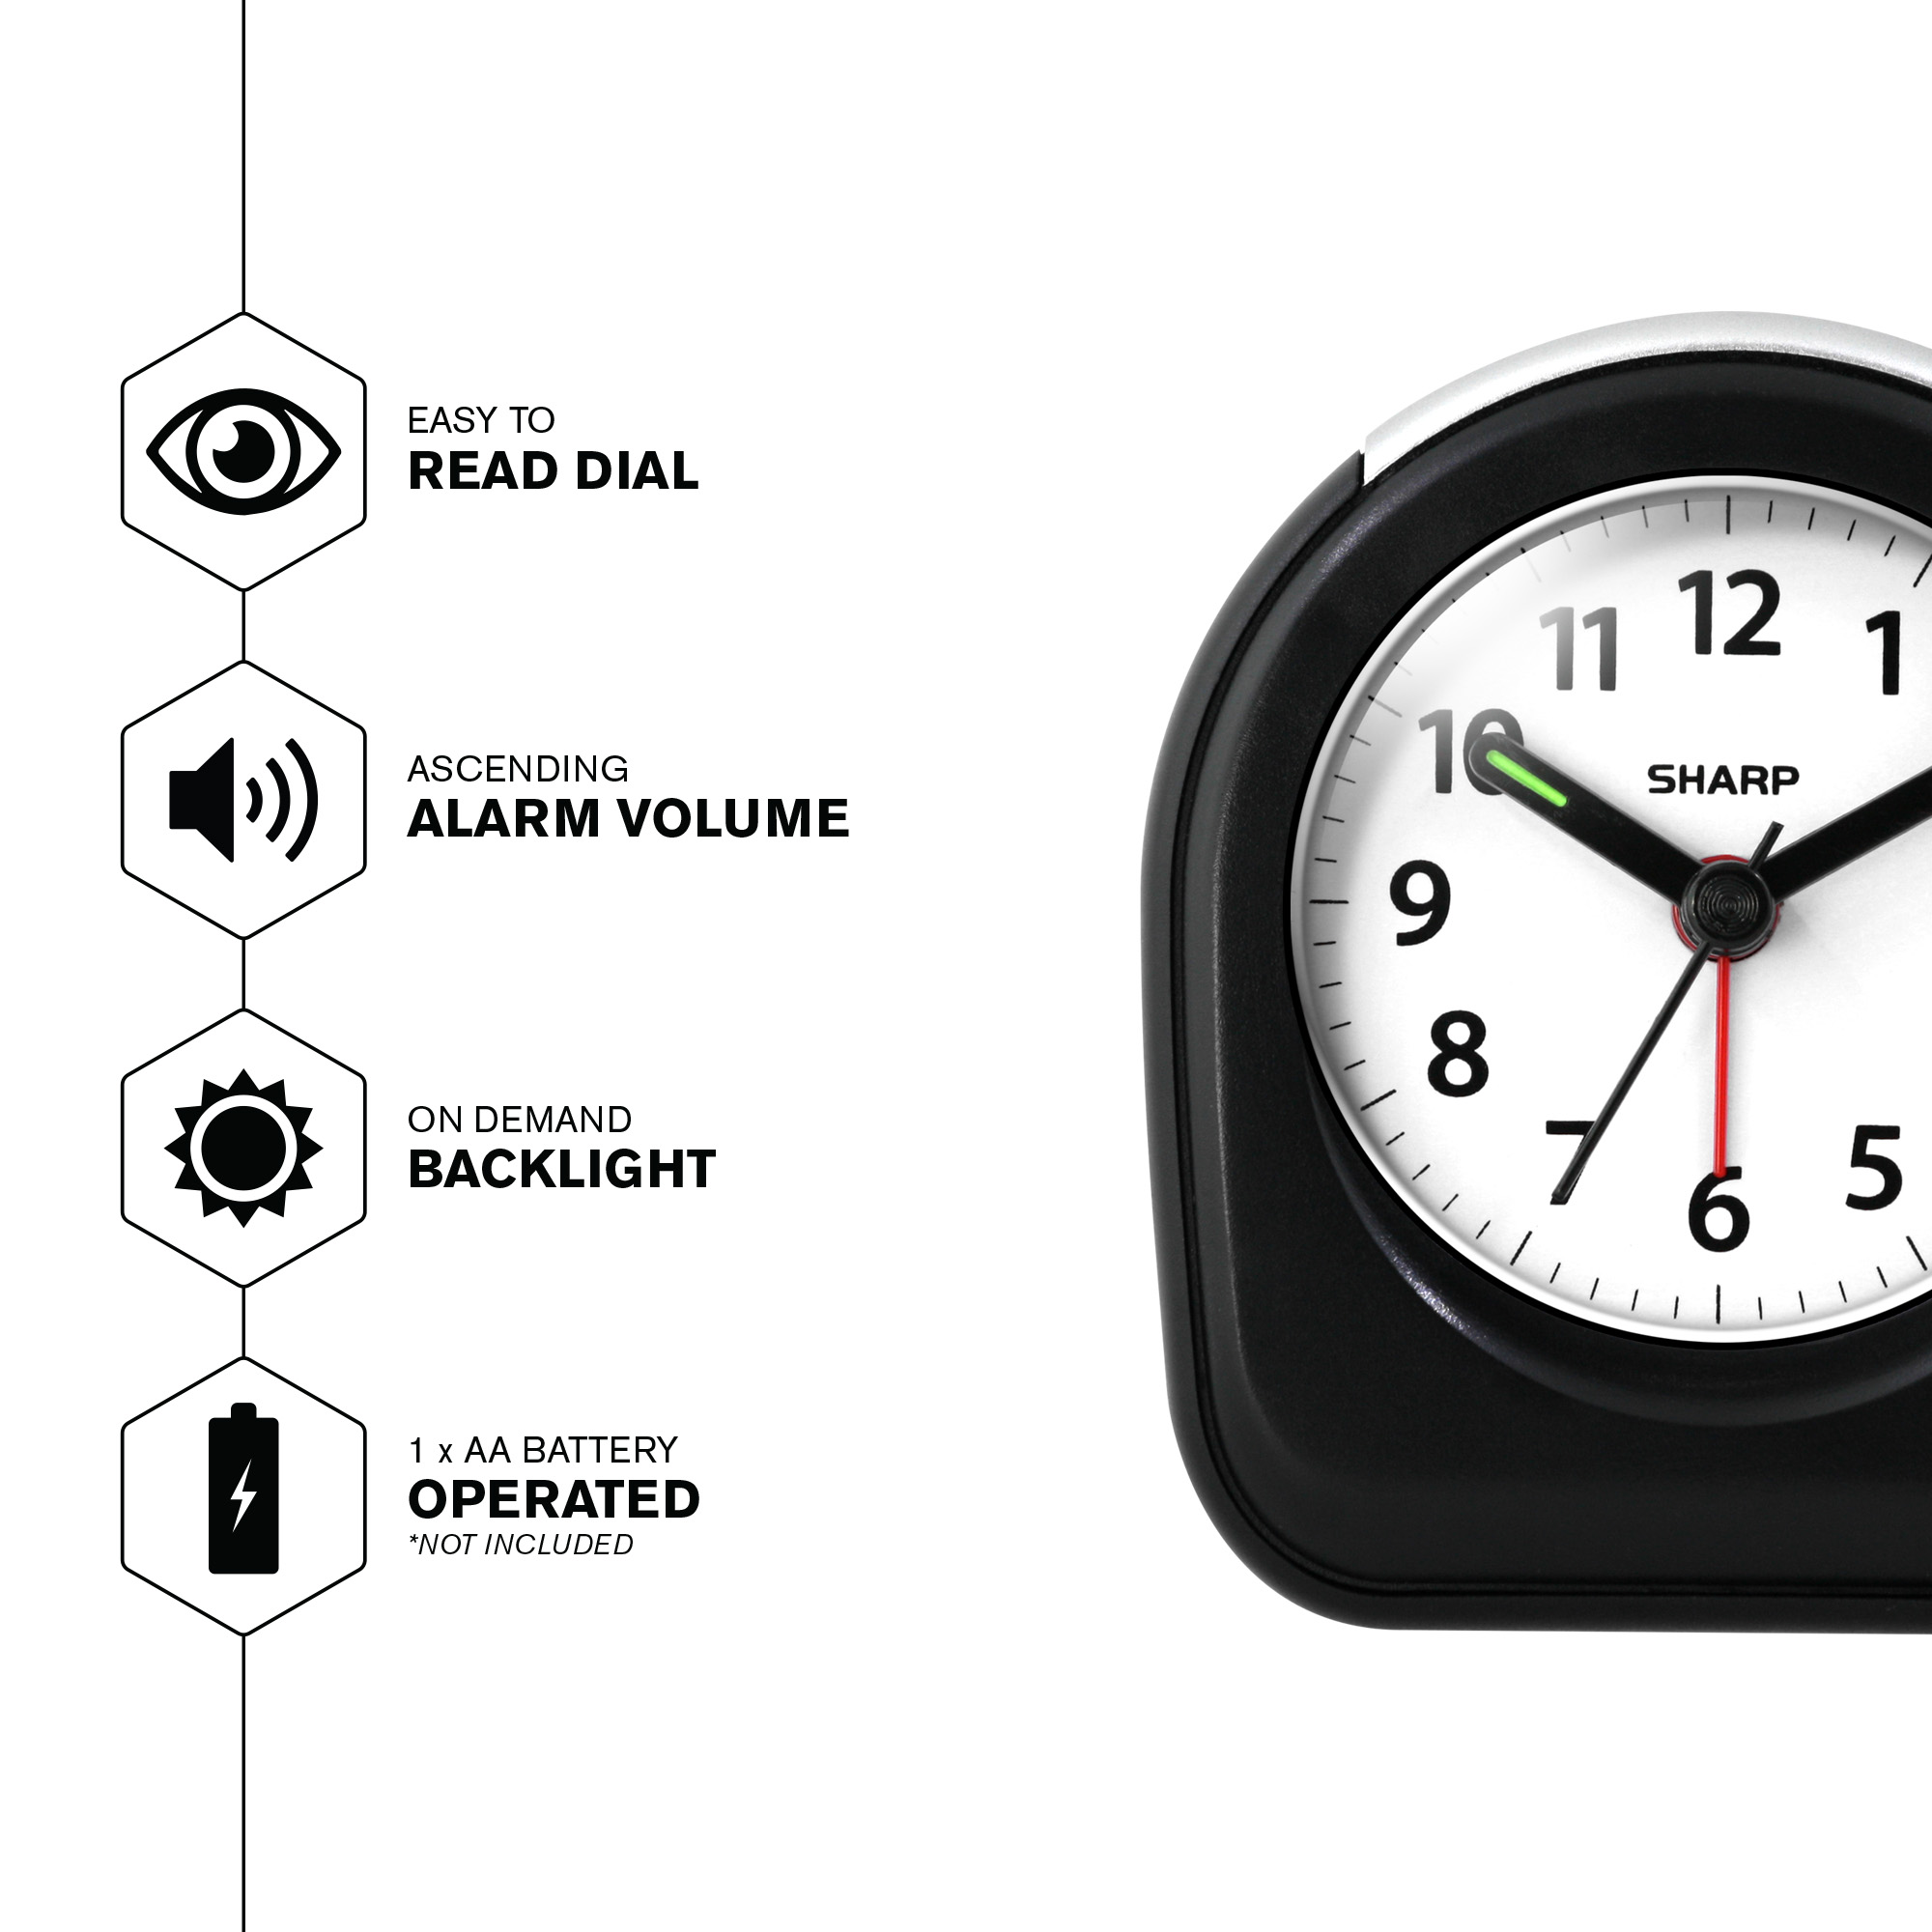 SHARP Quartz Analog Arch Alarm Clock, Black, Battery Operated, Small, Travel Clock - image 3 of 6